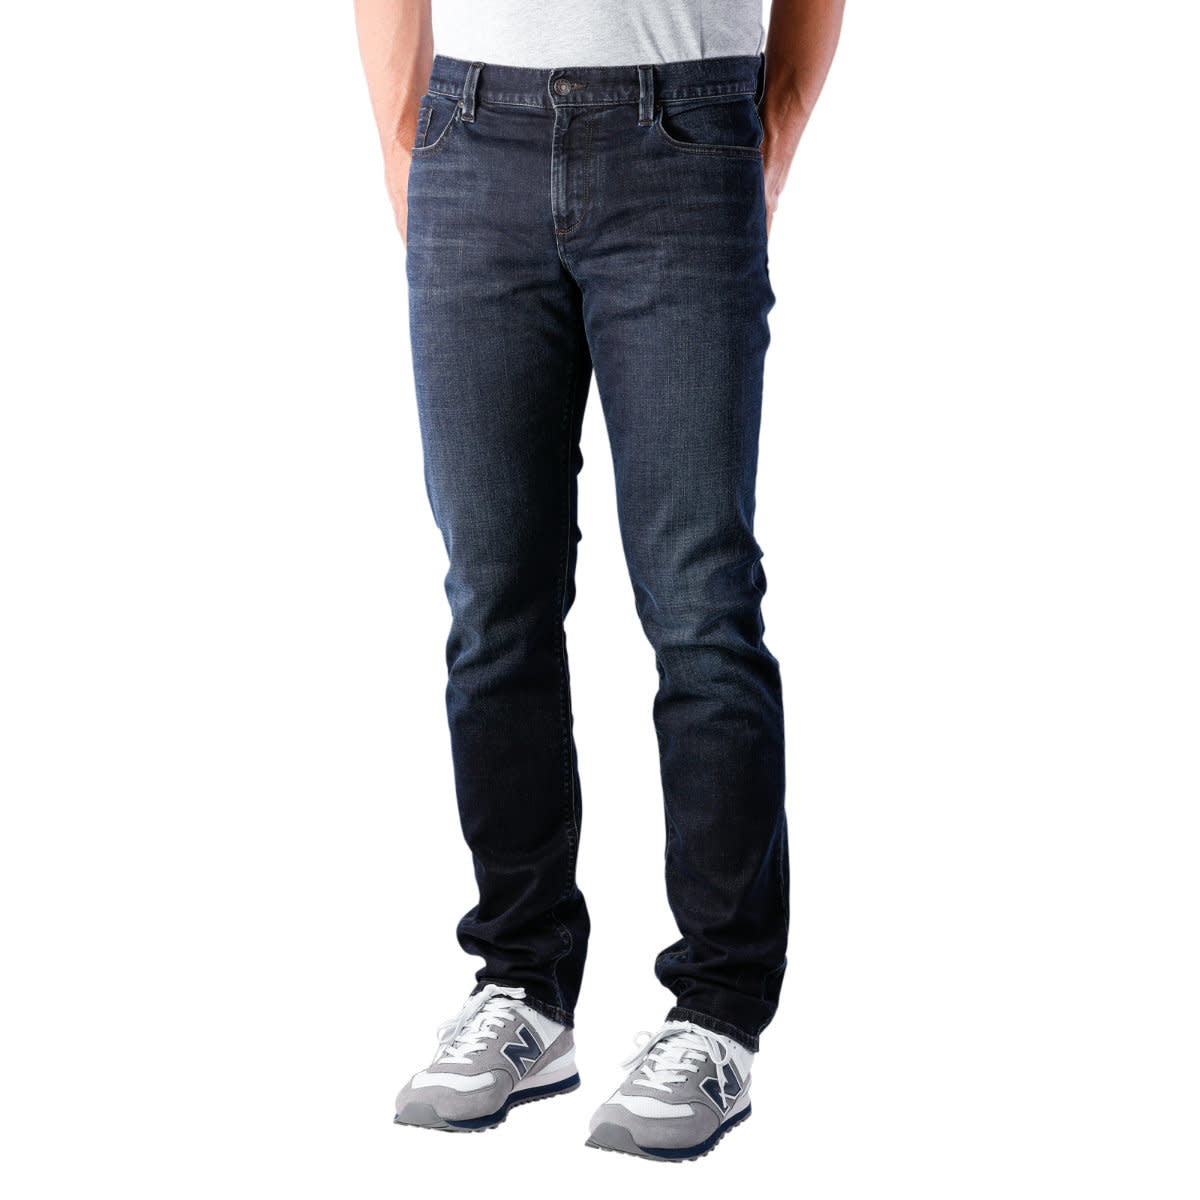 Alberto Pipe Regular Slim Fit Triple Dyed Denim - Charcoal - 2 - Bottoms - Jeans